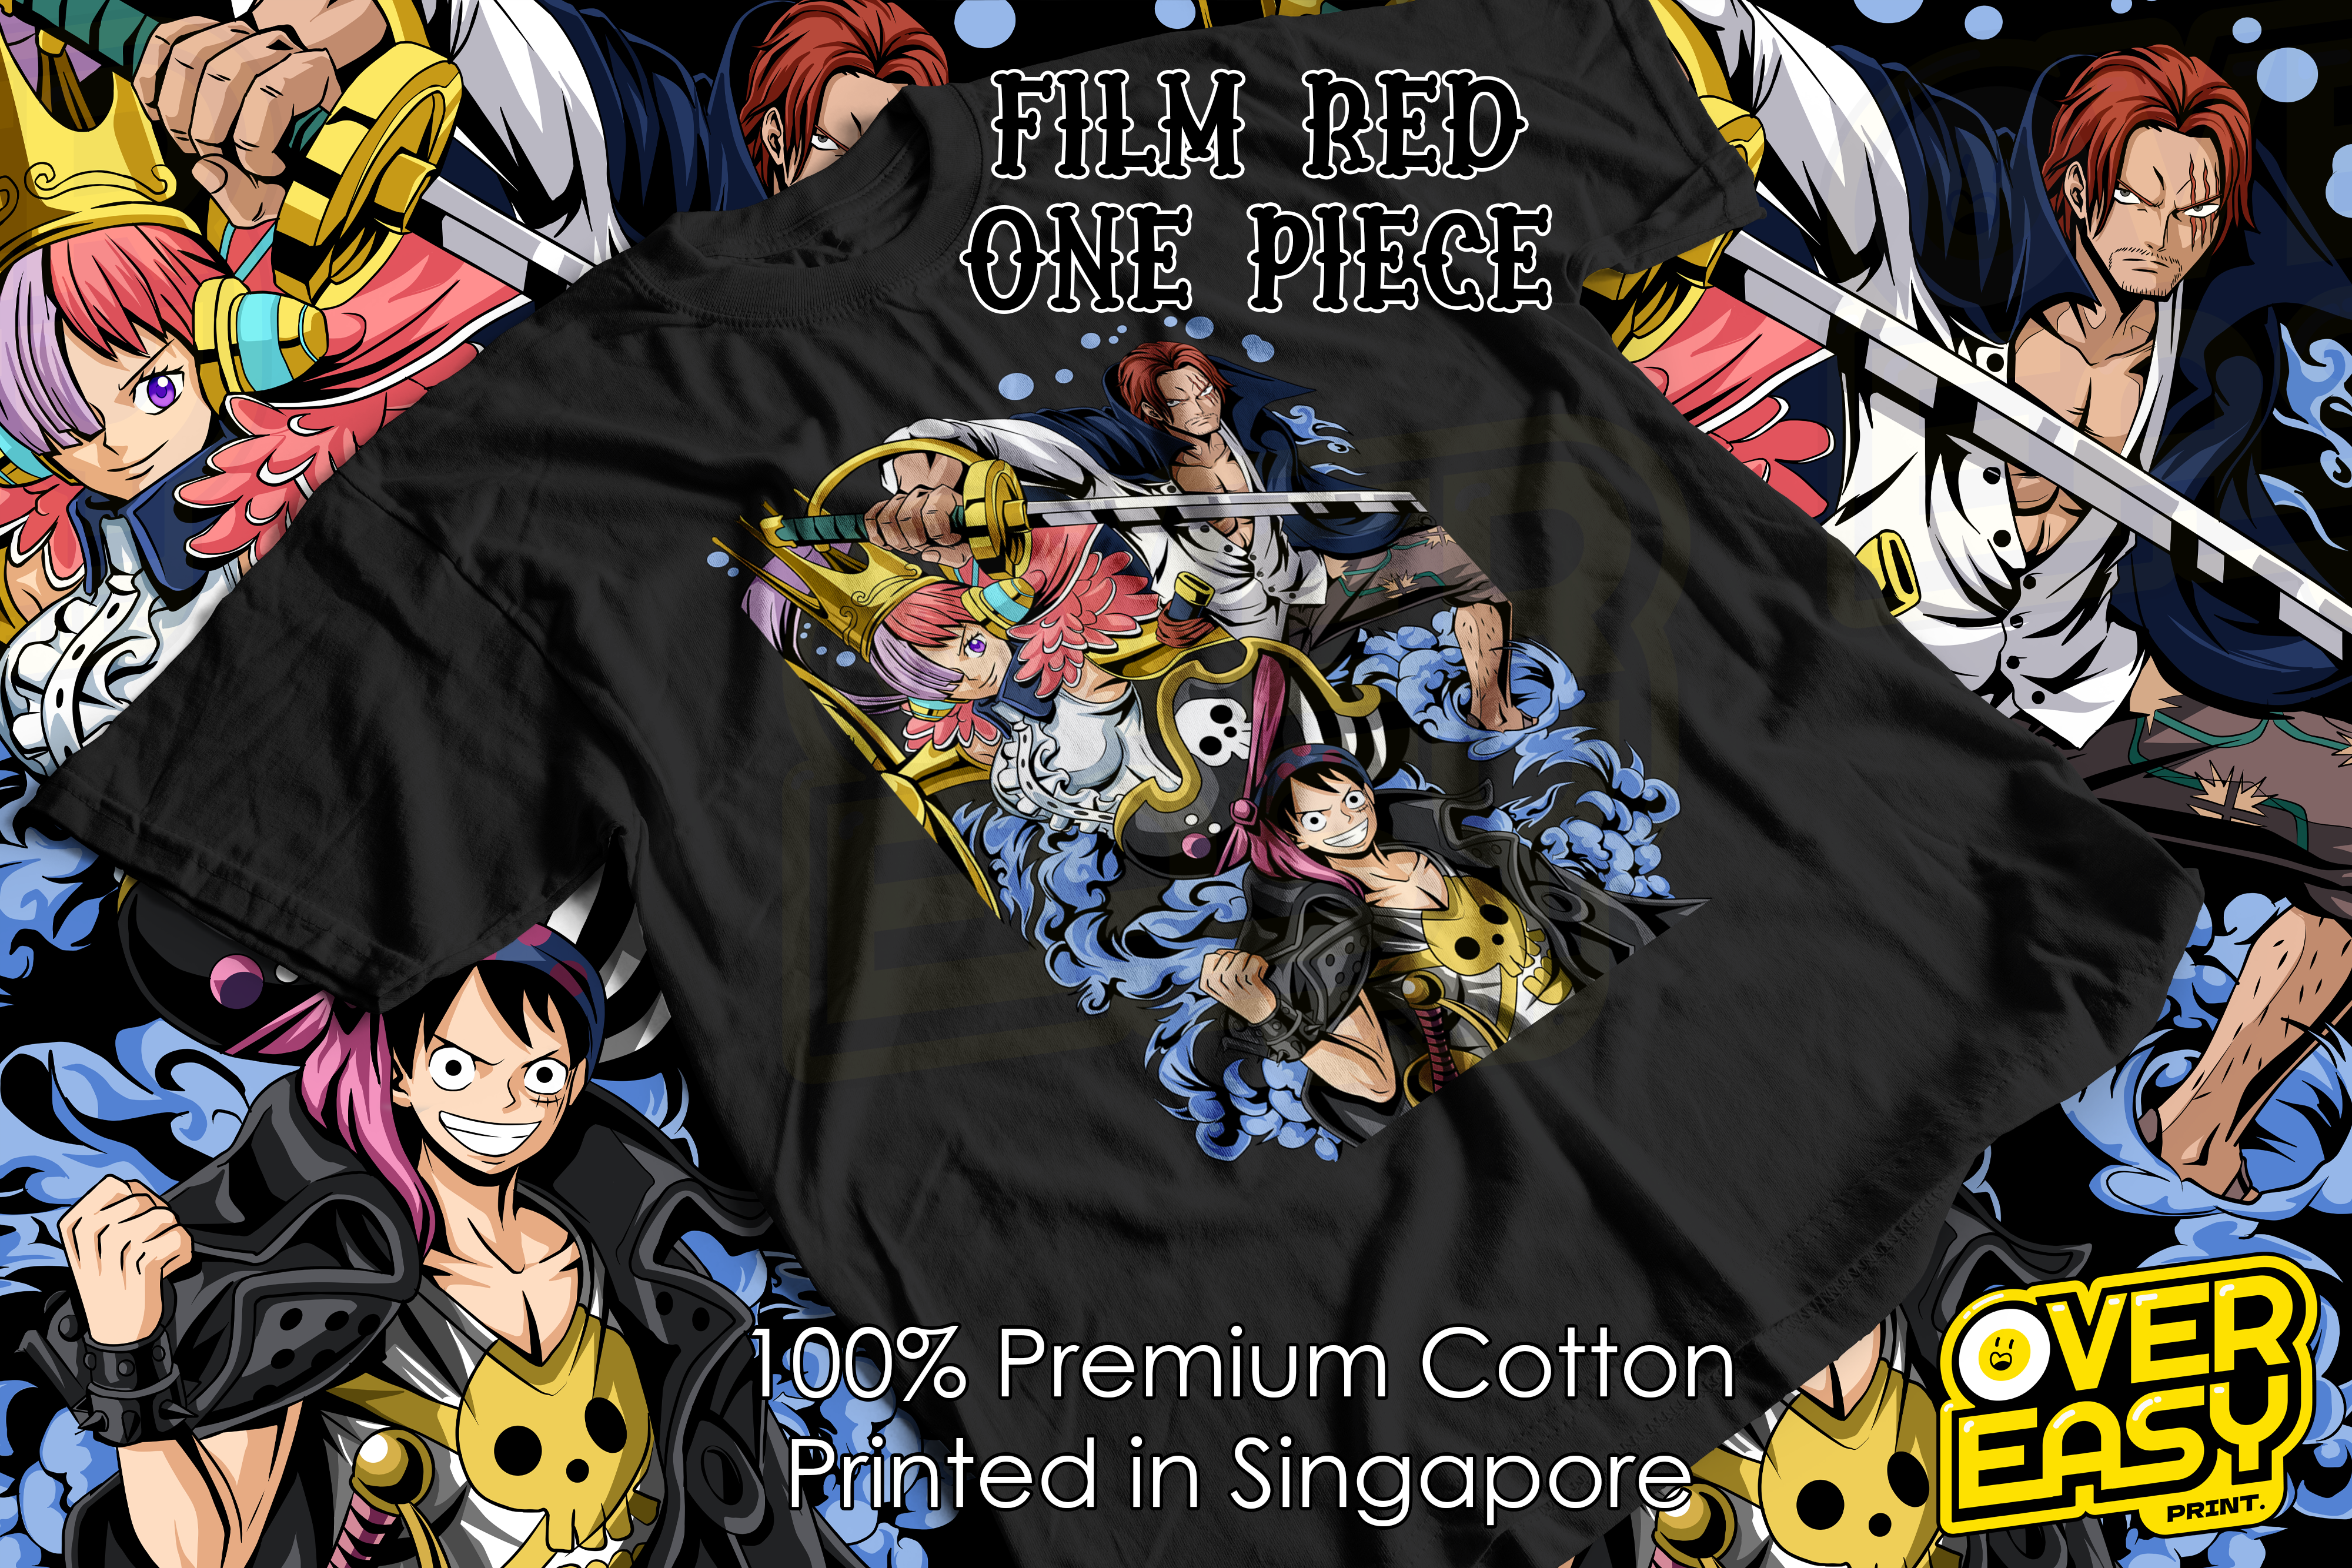 Film Red One Piece Fanart T-Shirt